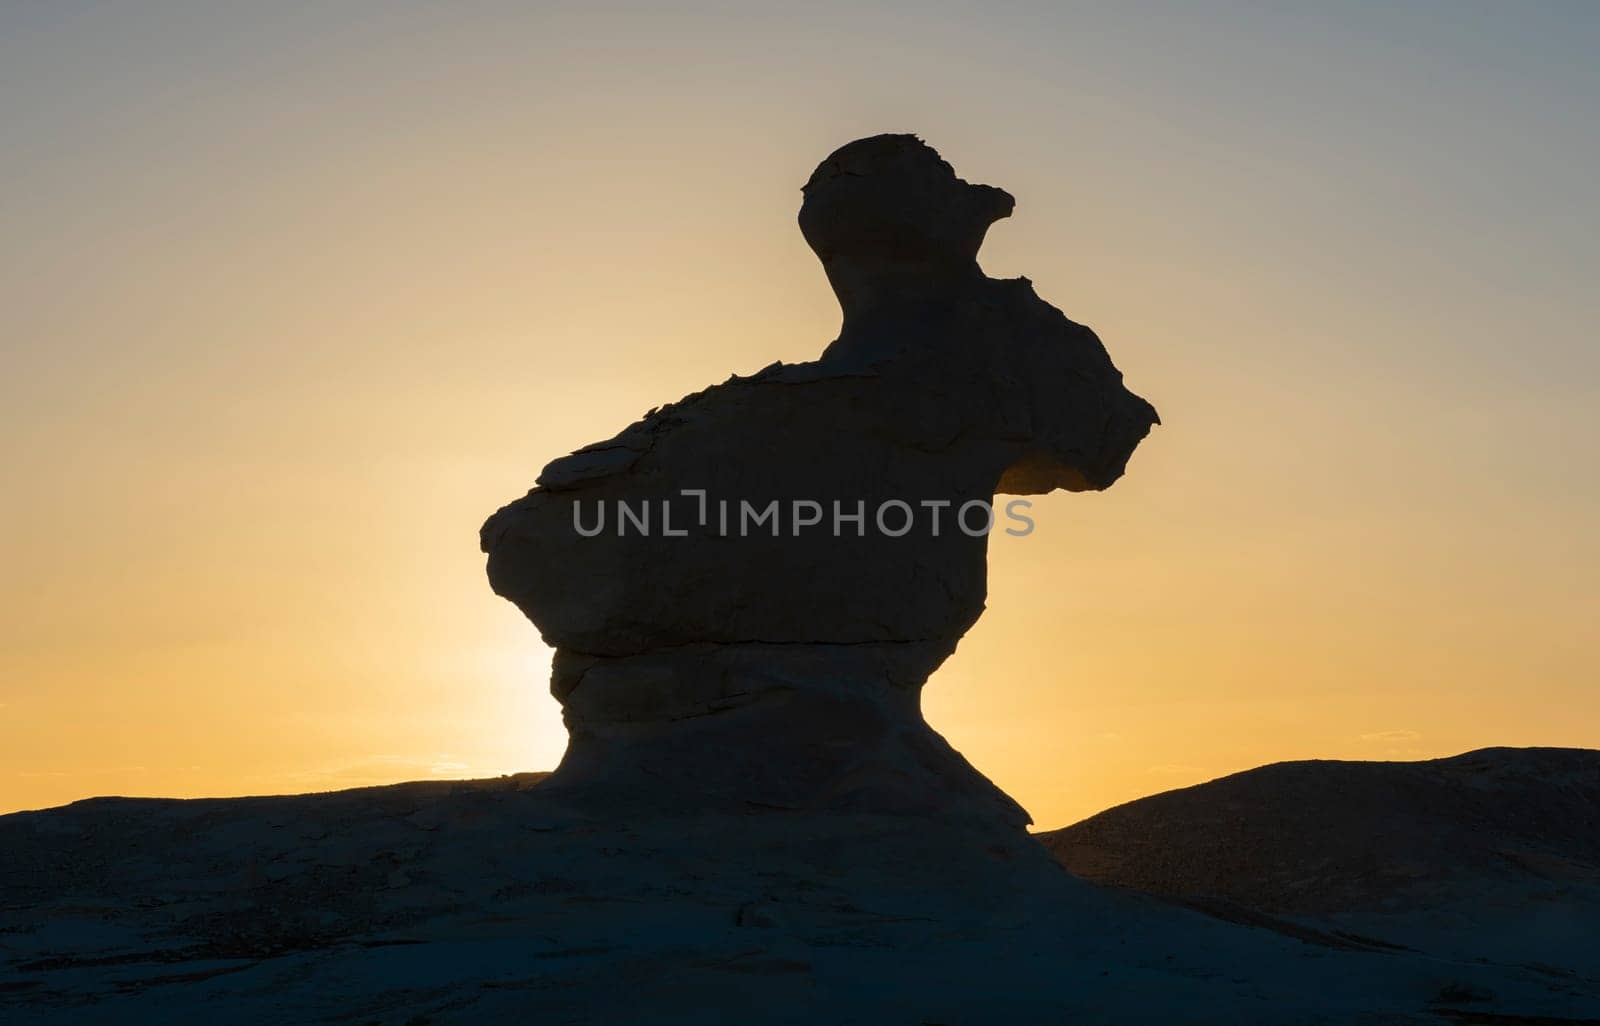 Barren desert landscape in hot climate with rock formation by paulvinten